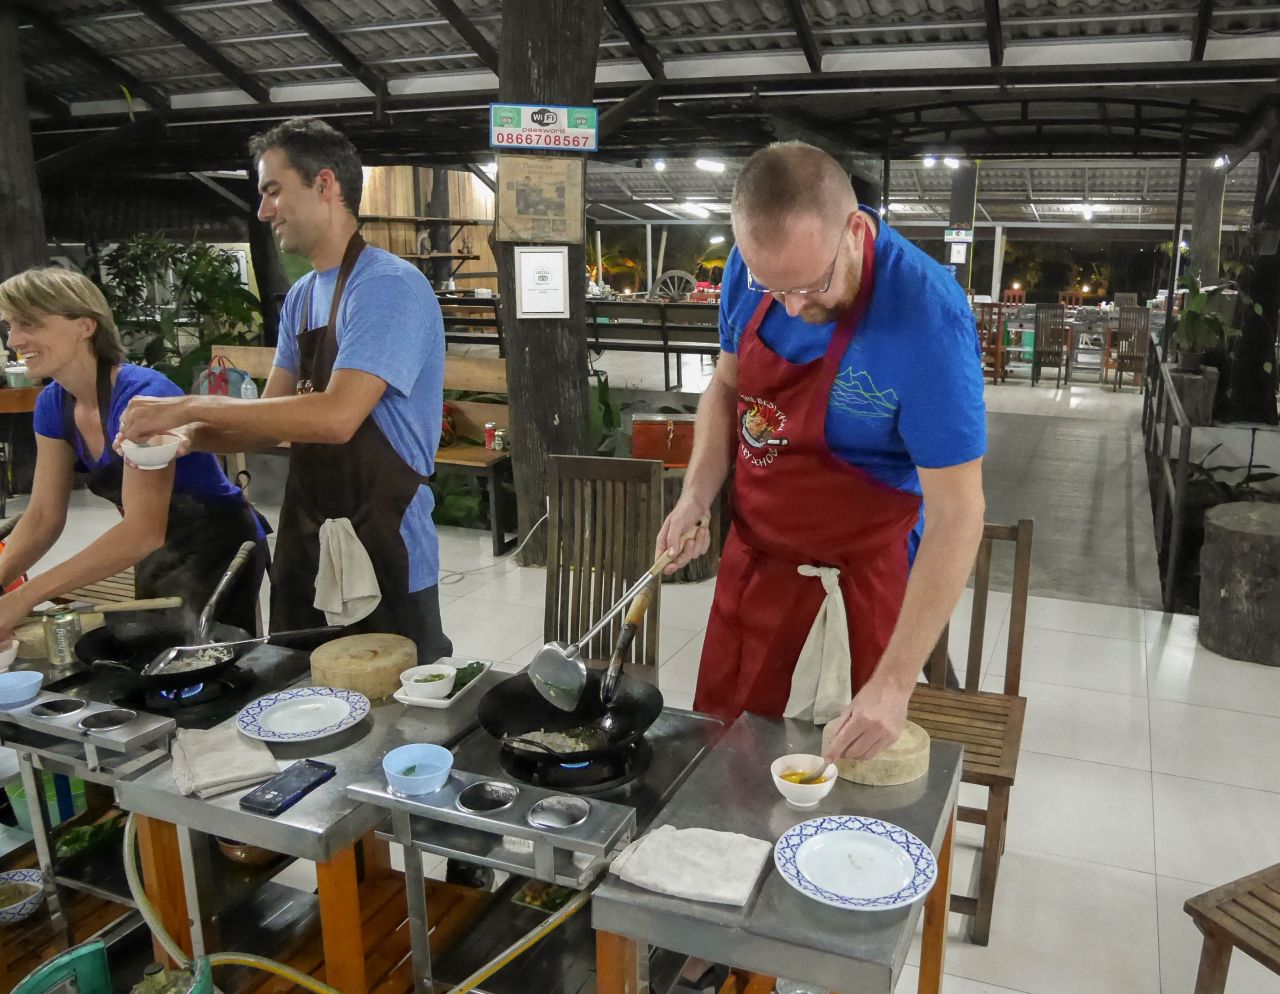 Cesta okolo sveta - Thajsko, cooking class